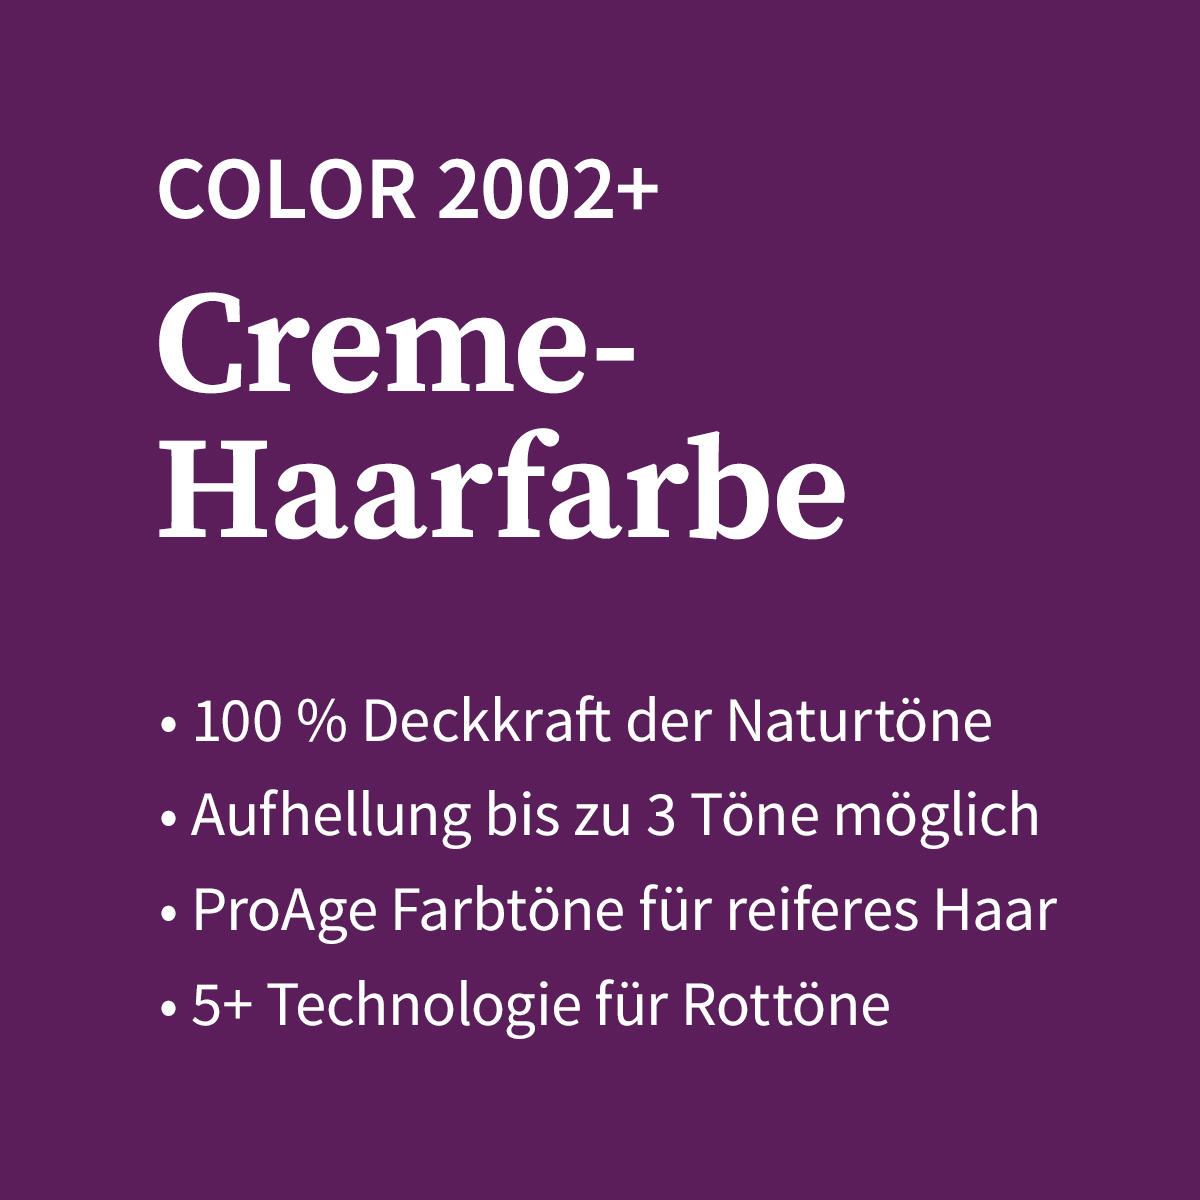 Basler Color 2002+ Cremehaarfarbe 8/45 hellblond rot mahagoni, Tube 60 ml - 4